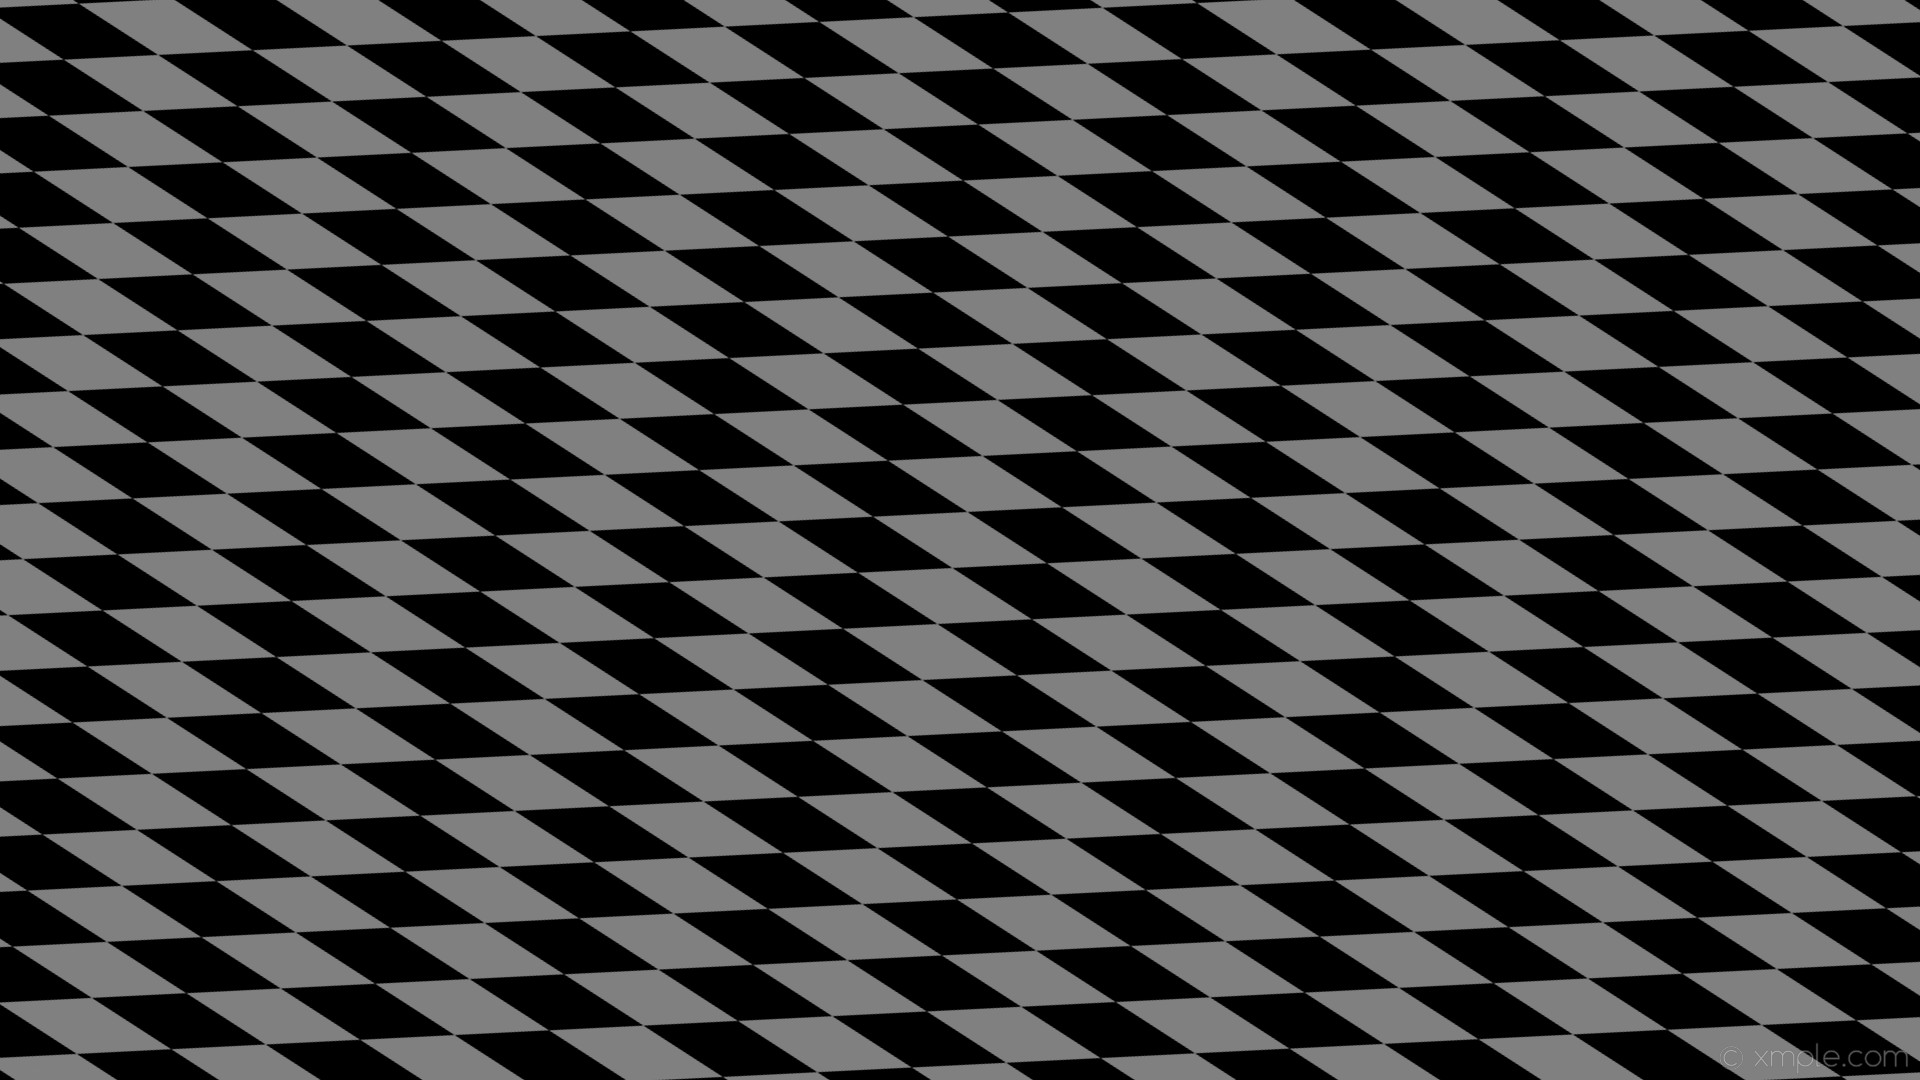 1920x1080 wallpaper lozenge black rhombus diamond grey gray #808080 #000000 165Â°  180px 58px